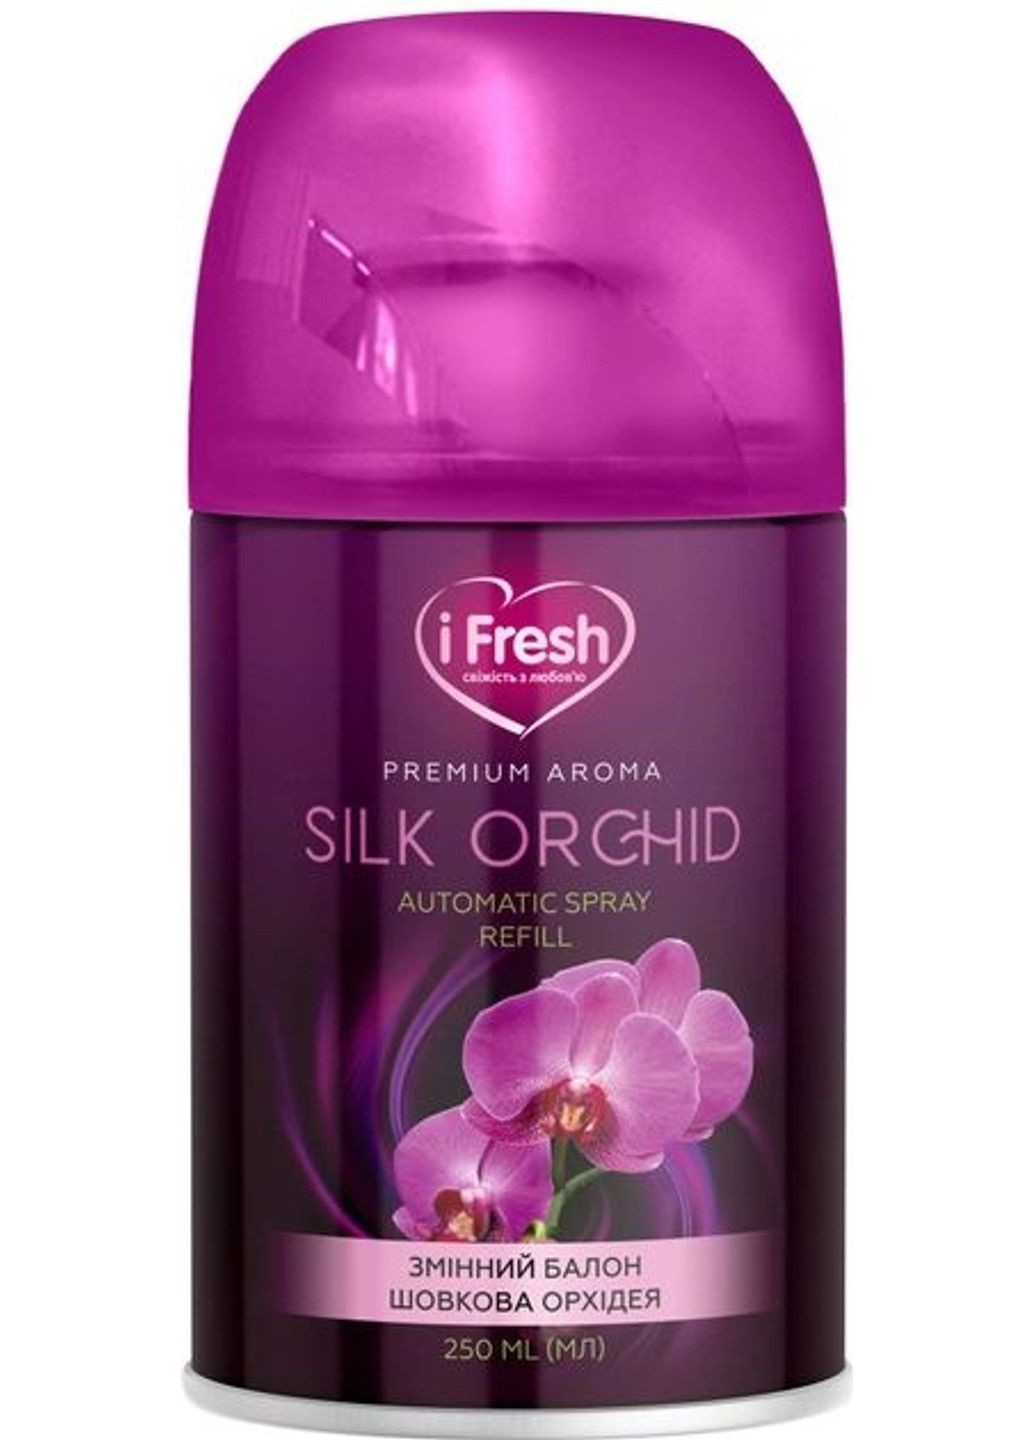 Сменный аэрозольный баллон Premium aroma Silk orchid 250 мл iFresh (280898452)